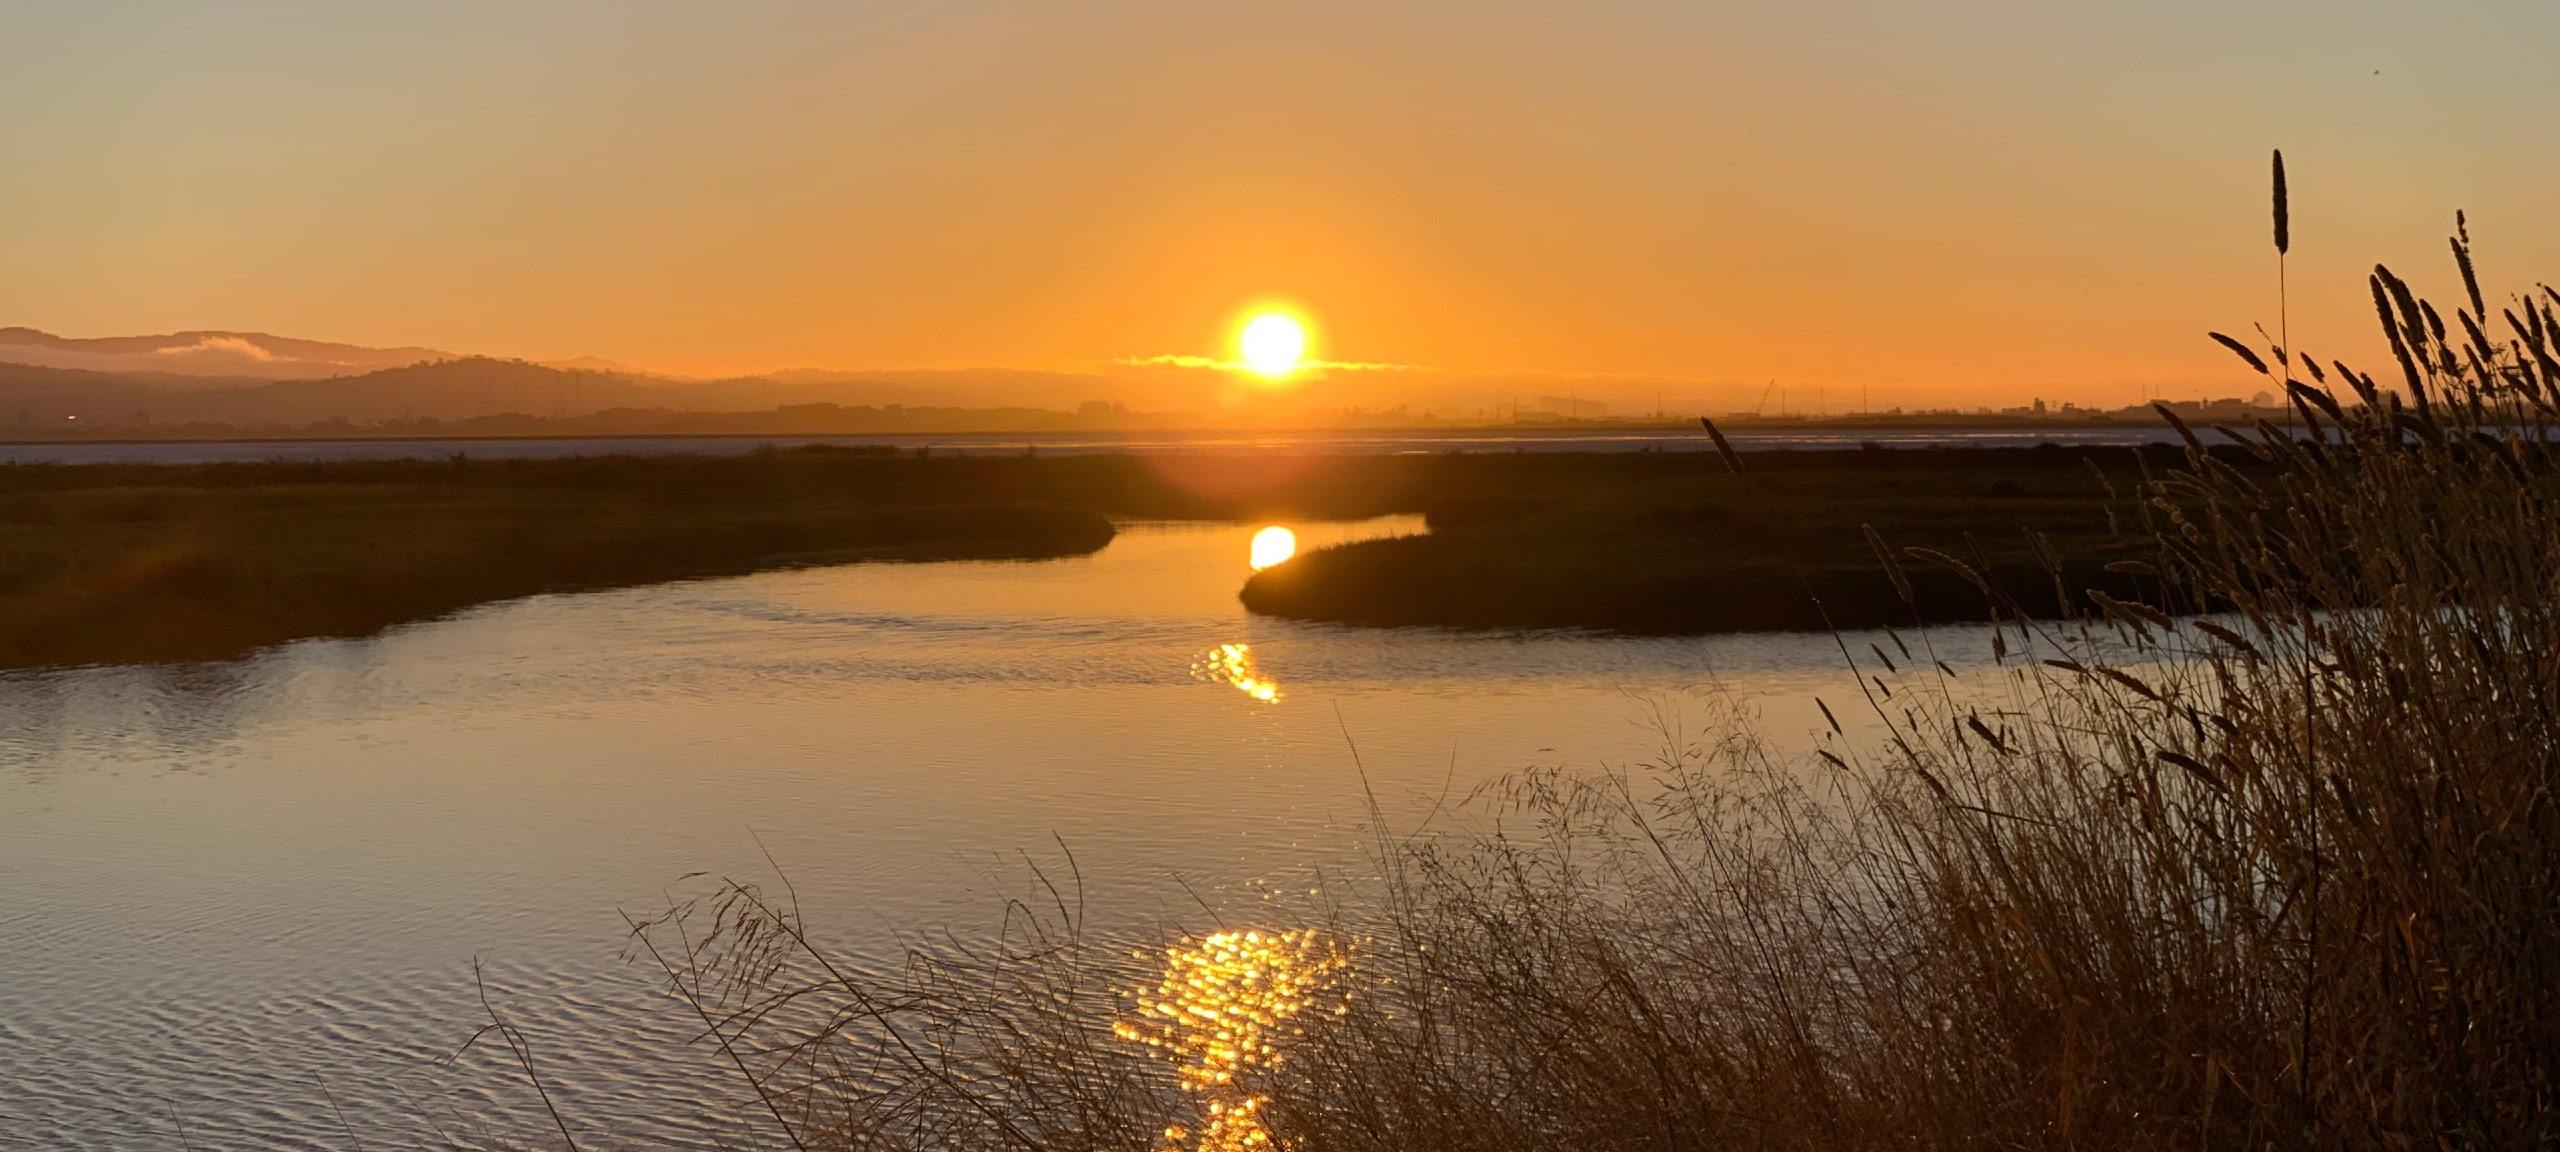 Sunset over marshes at Bedwell Bayfront Park, Menlo Park, CA